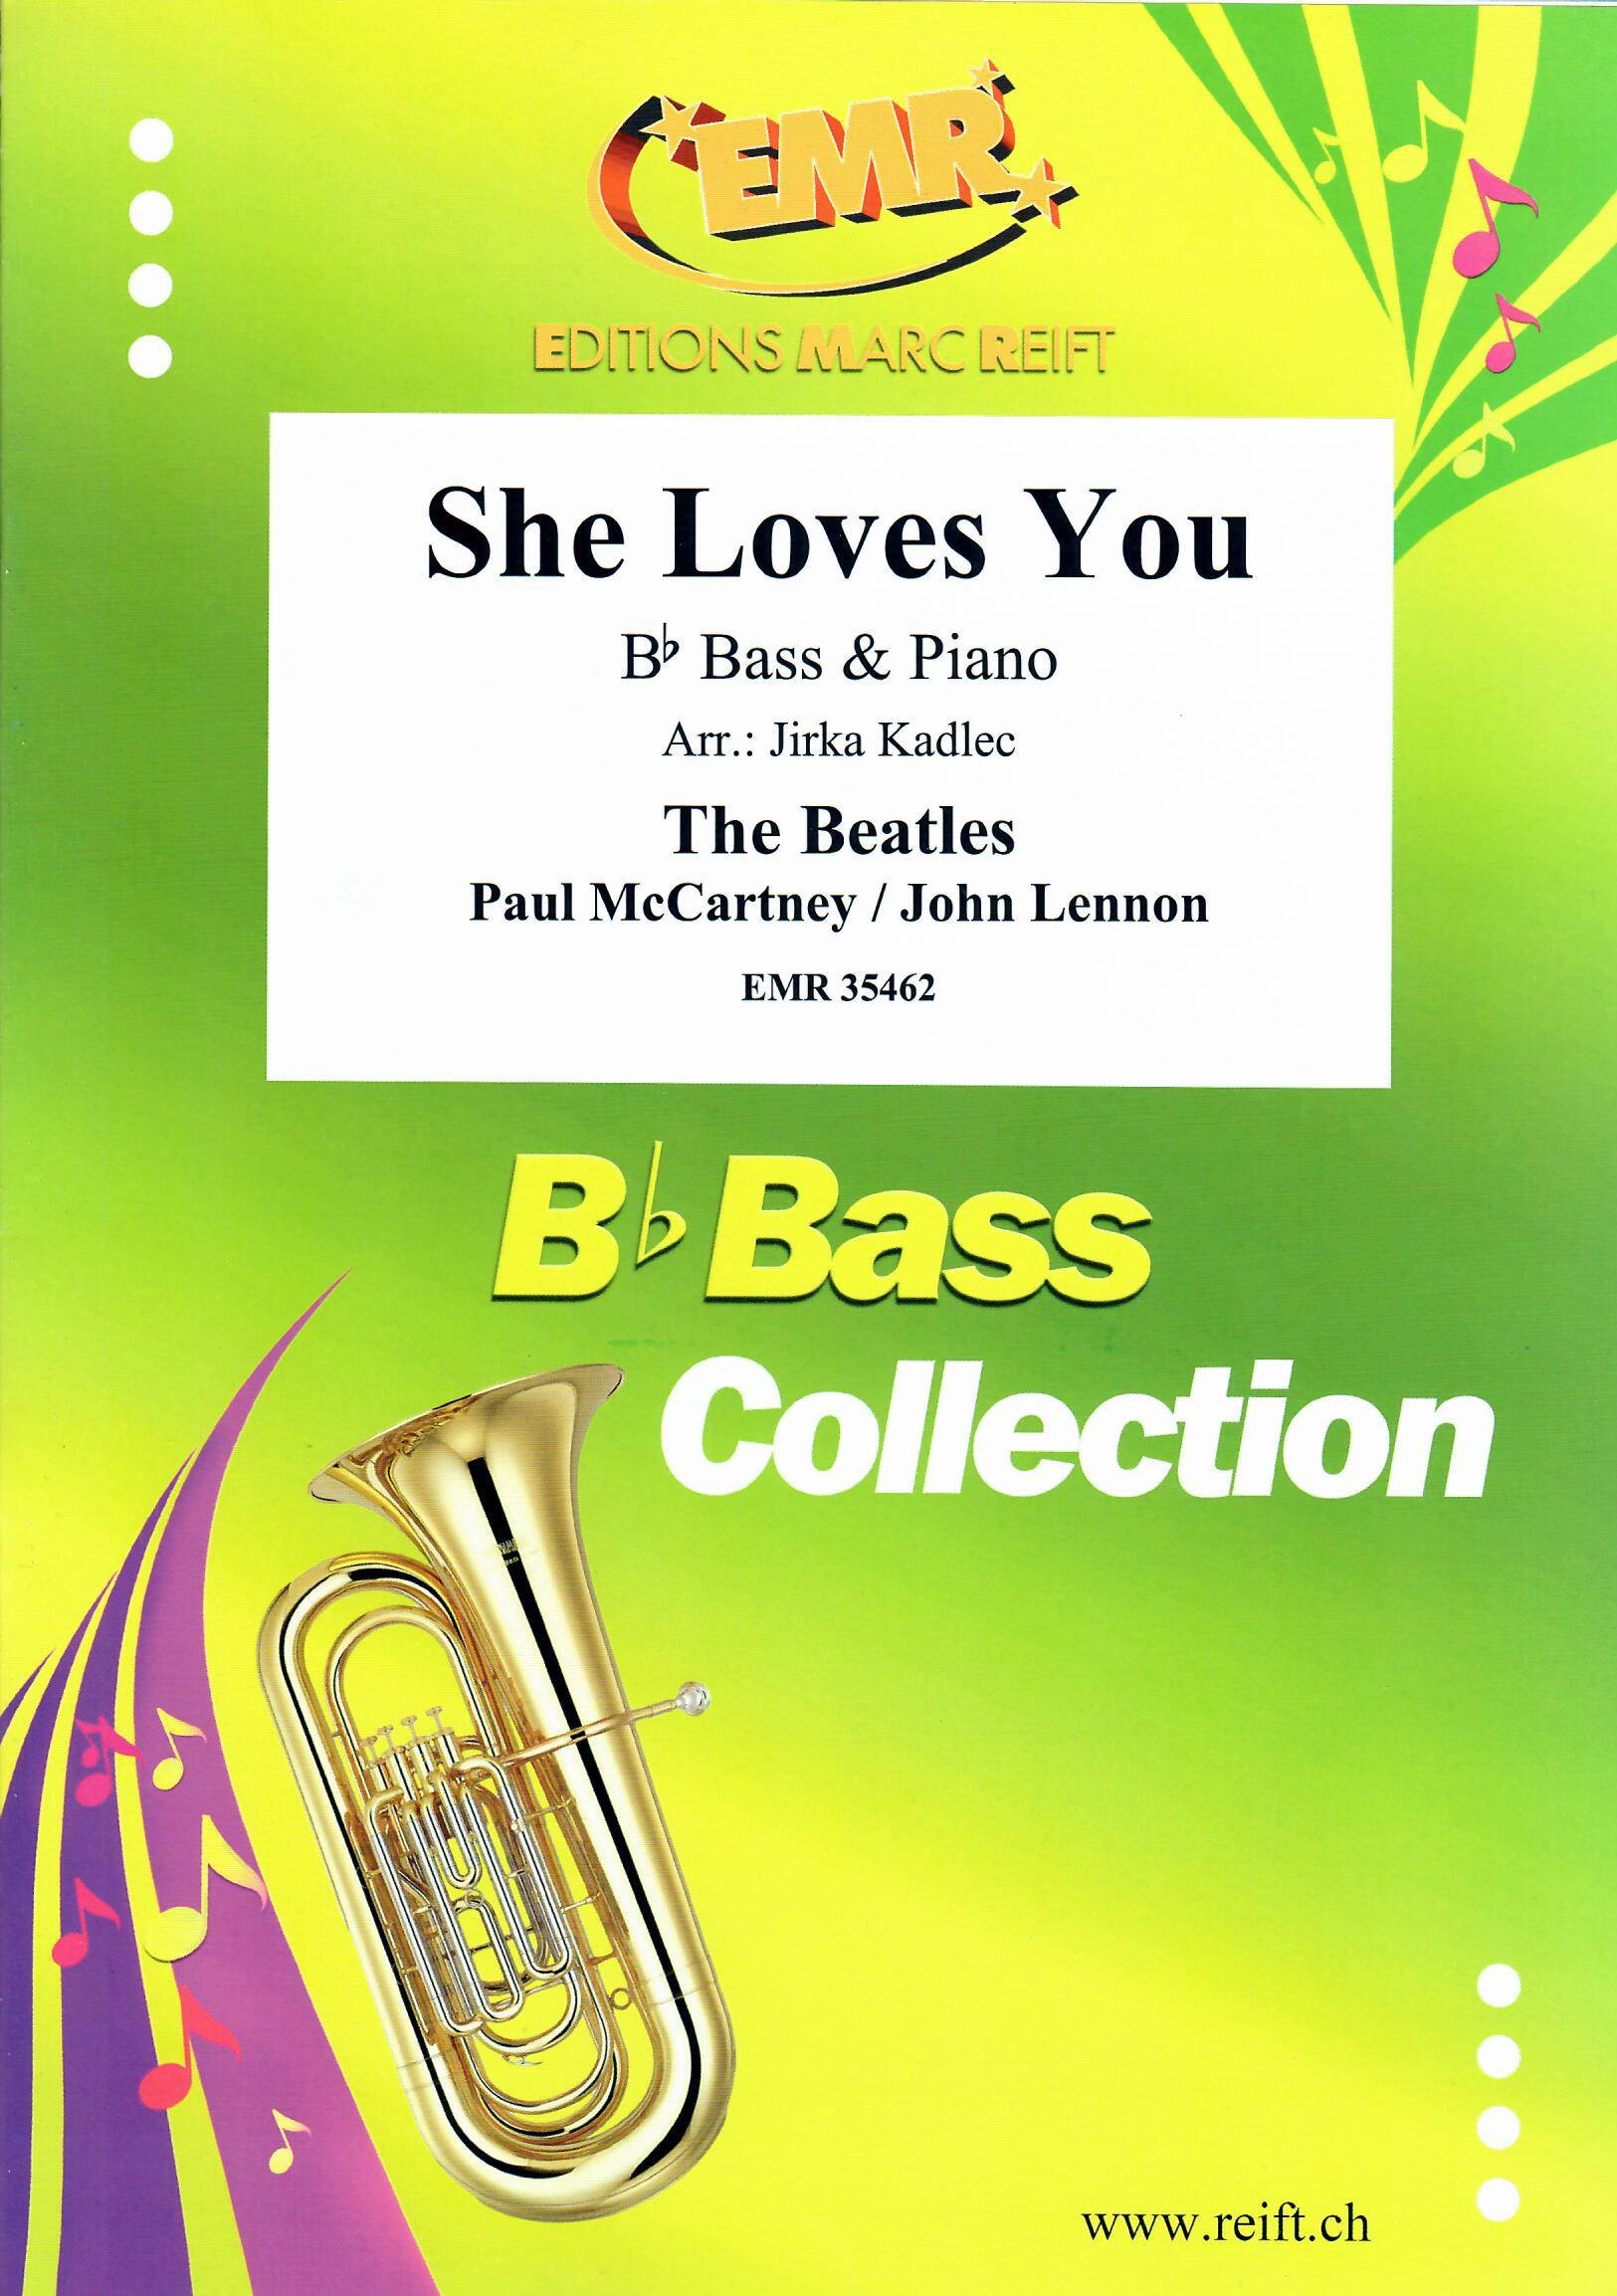 SHE LOVES YOU, SOLOS - E♭. Bass